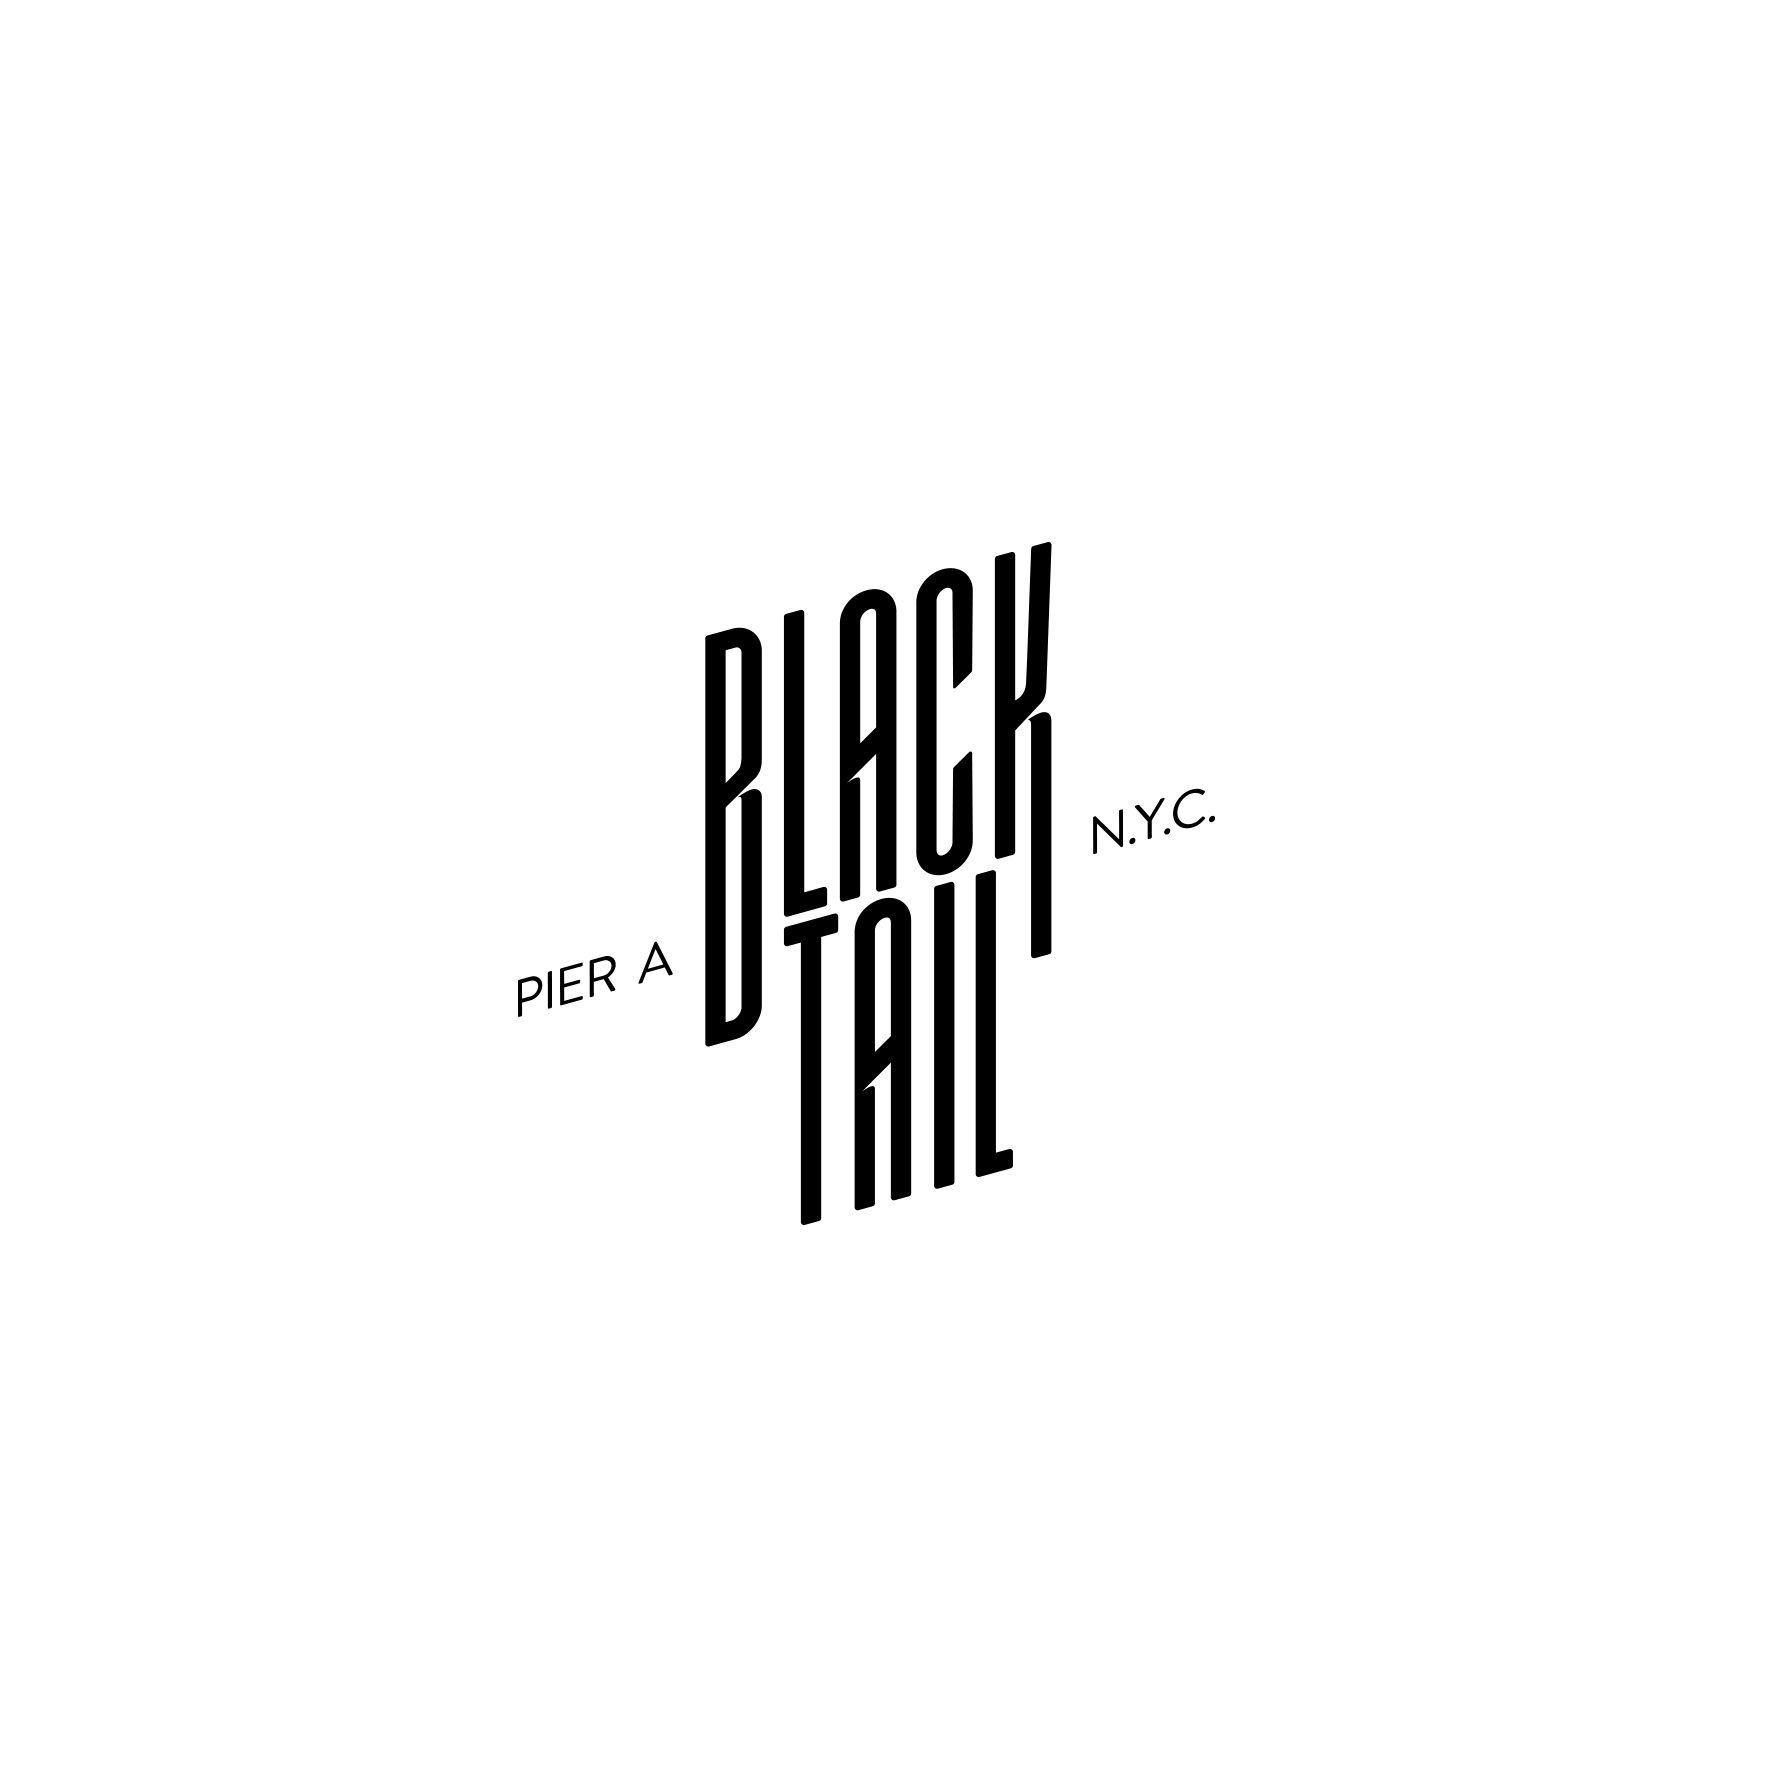 BlackTail New York logo